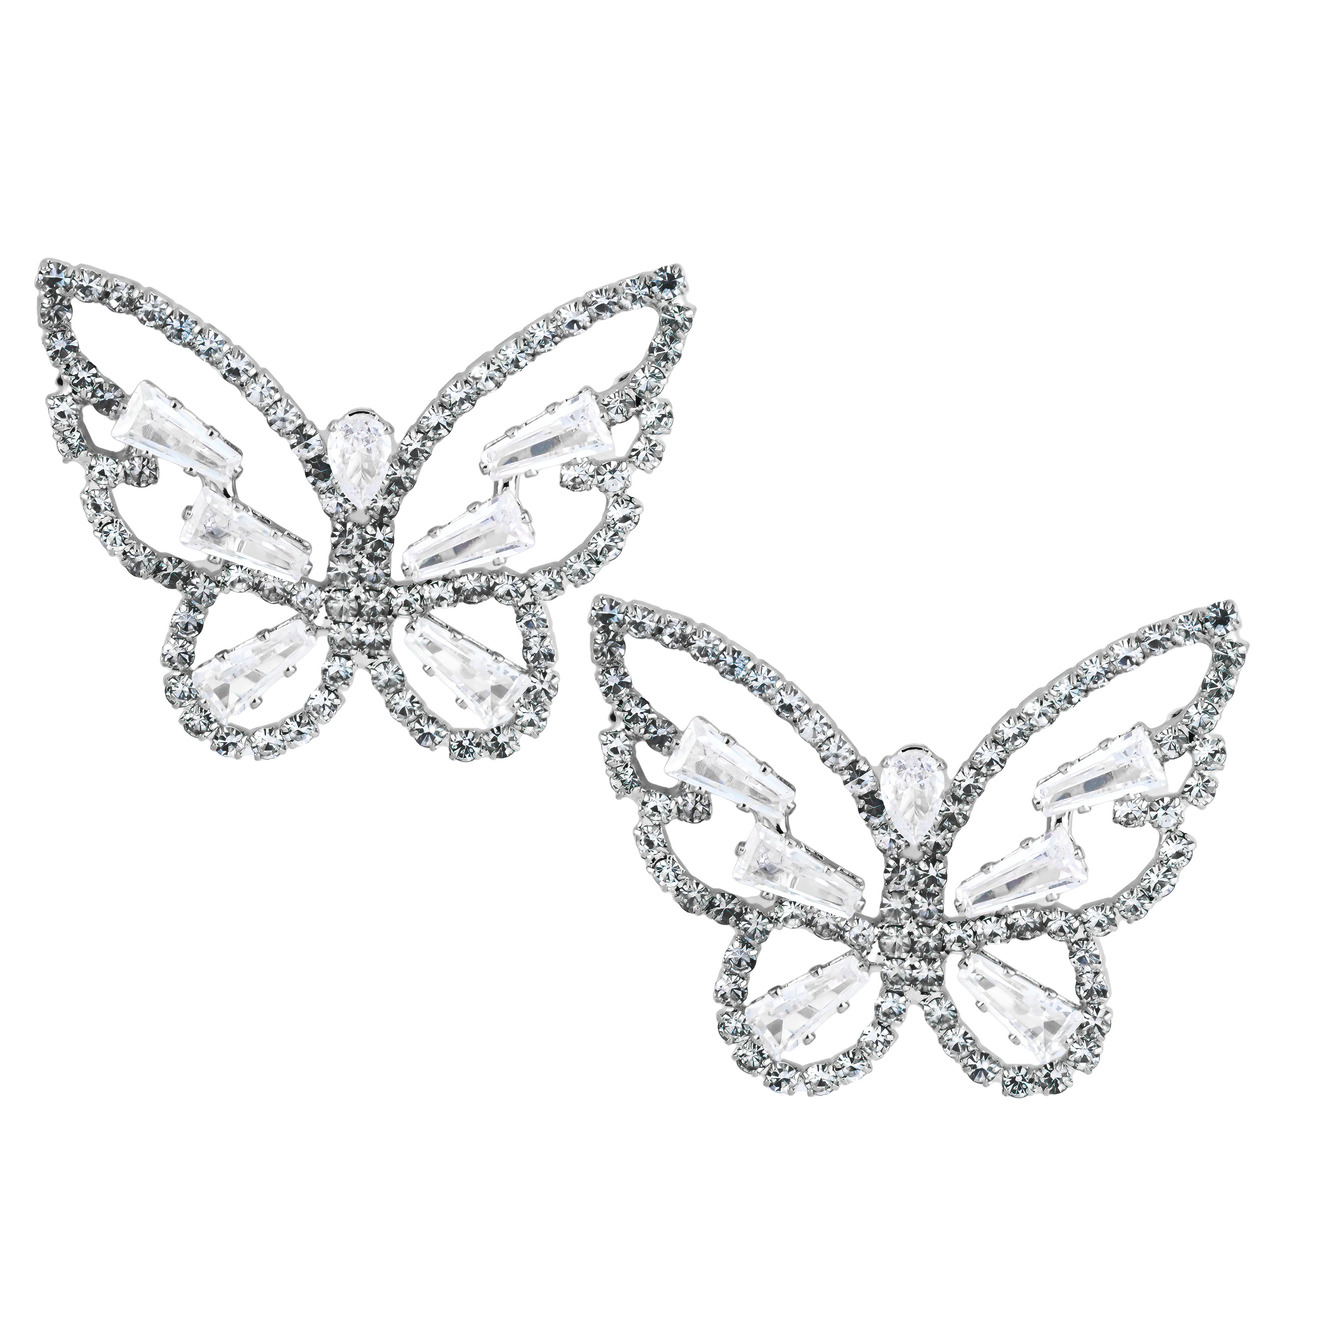 Herald Percy Серебристые серьги-бабочки с кристаллами